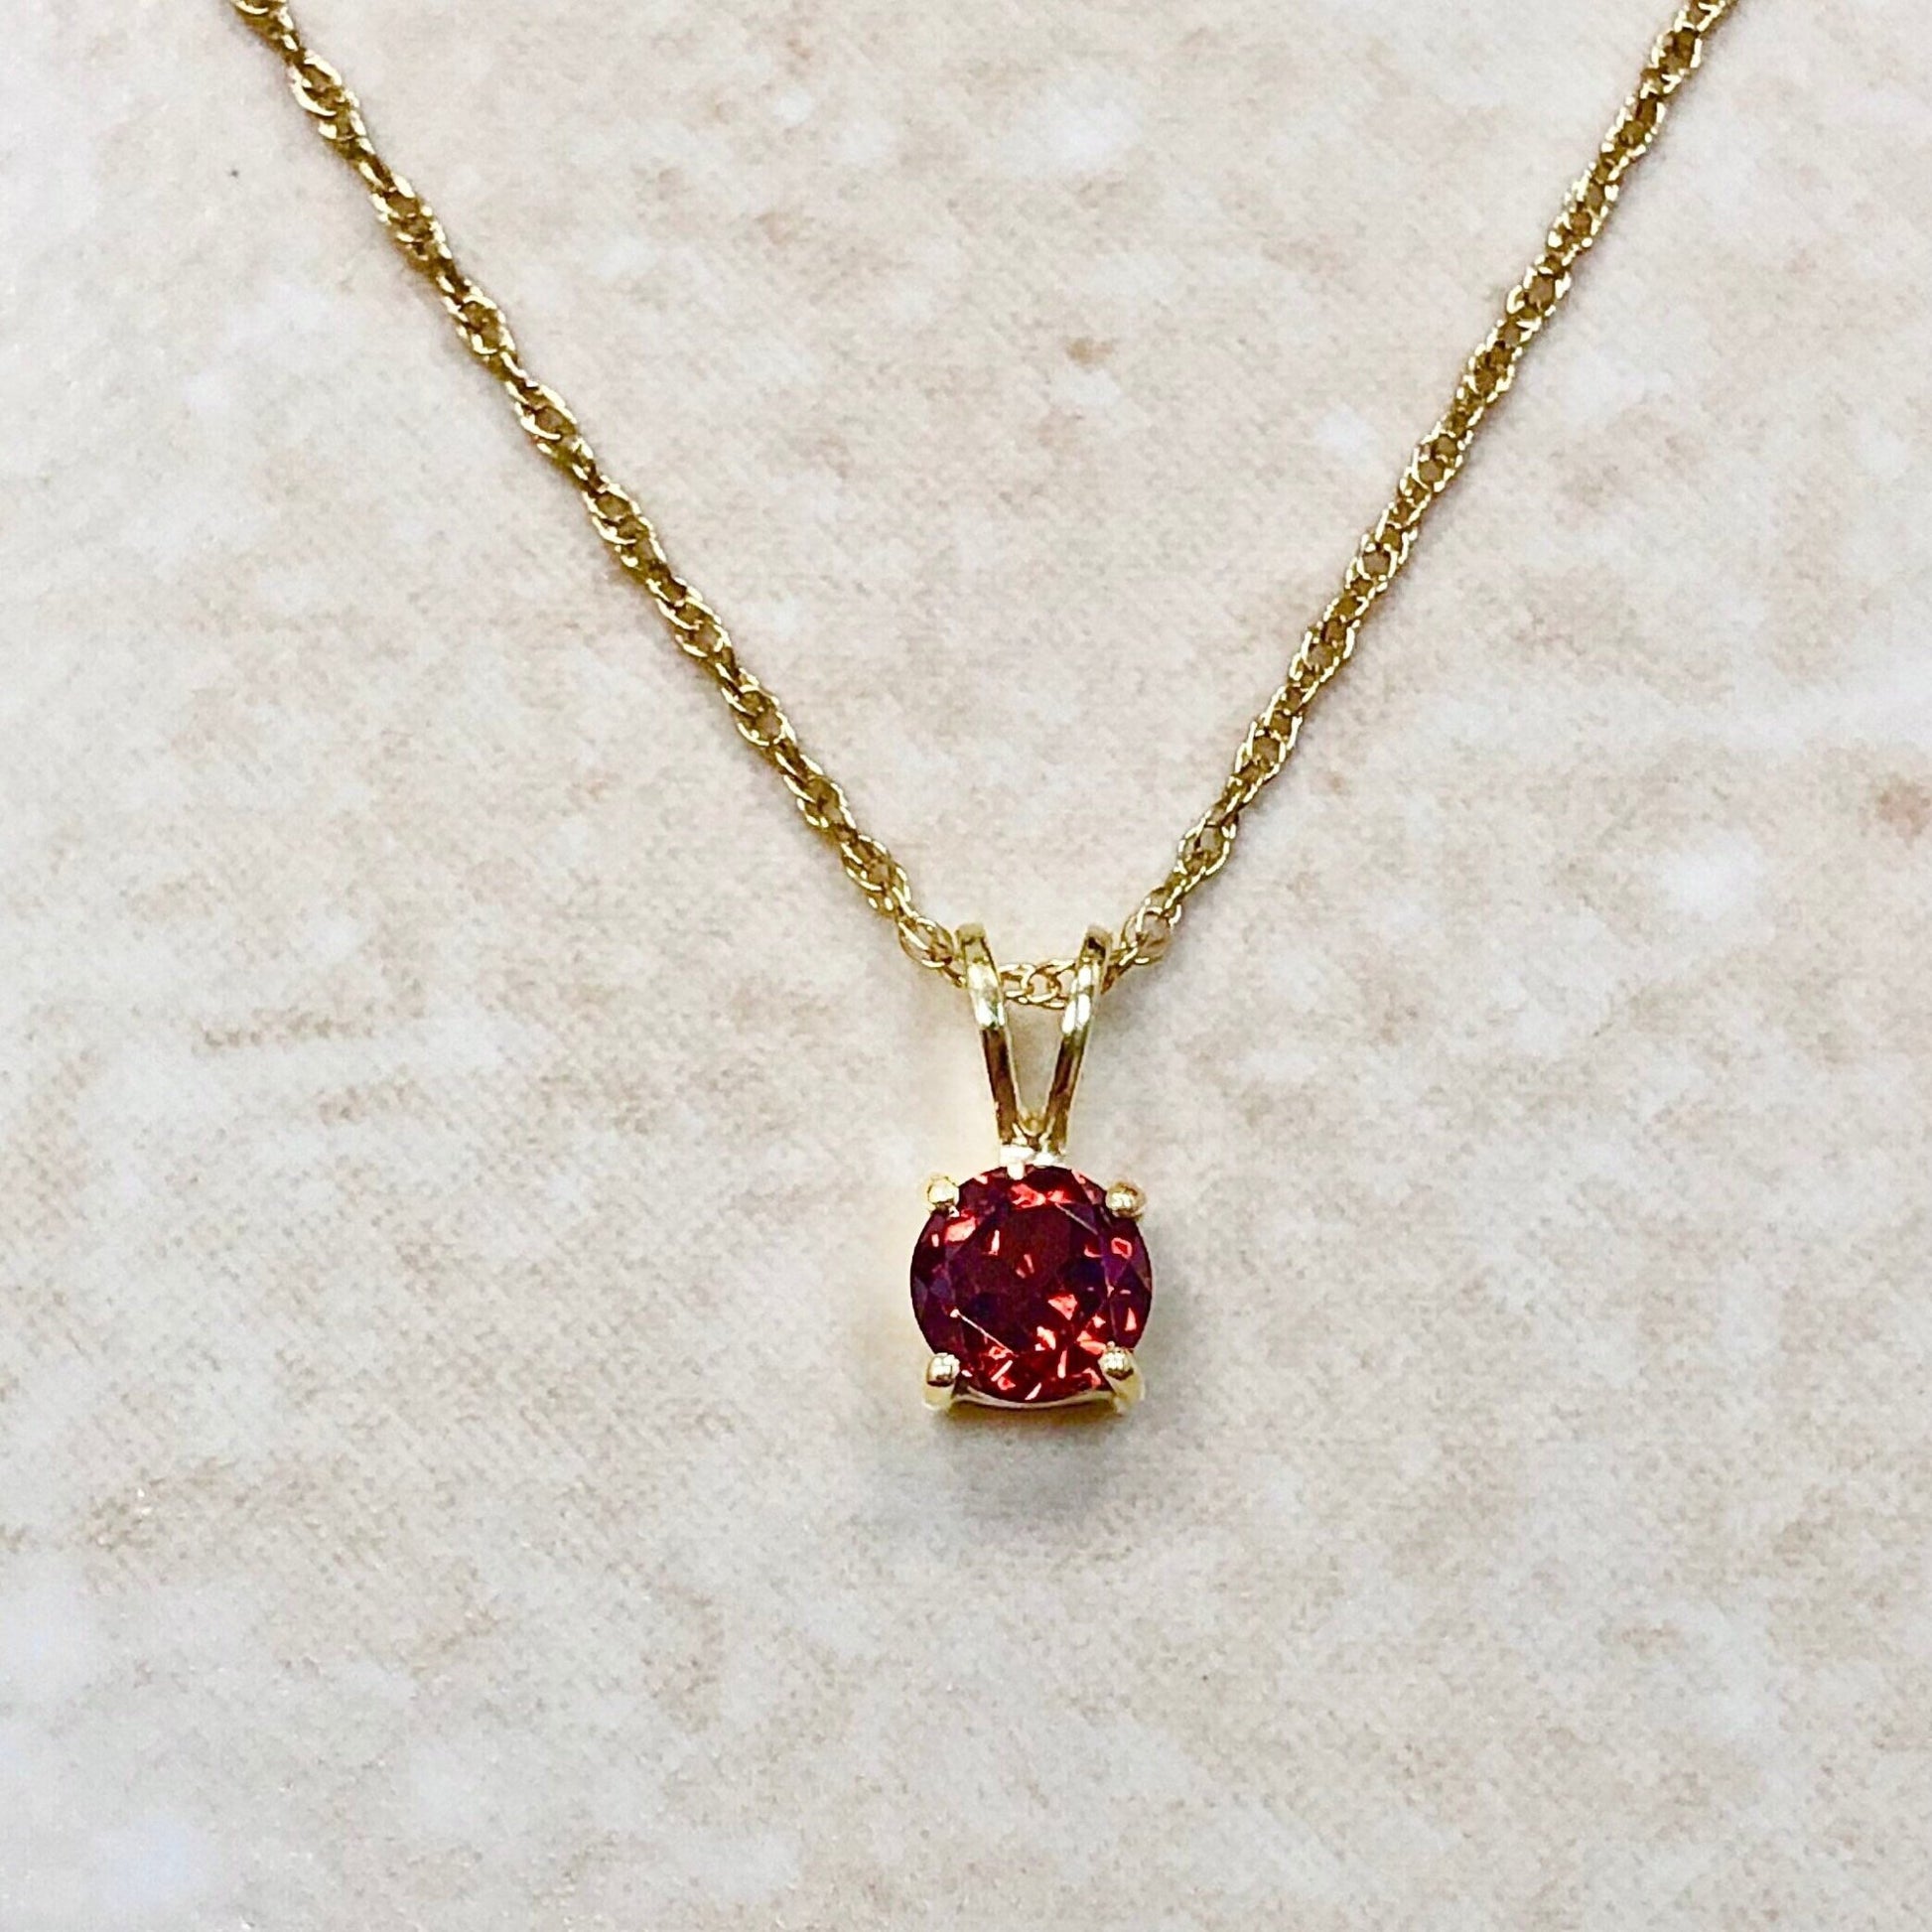 Garnet Pendant Necklace - 14 Karat Yellow Gold - January Birthstone - Genuine Gemstone - 18” Chain - Birthday Gift